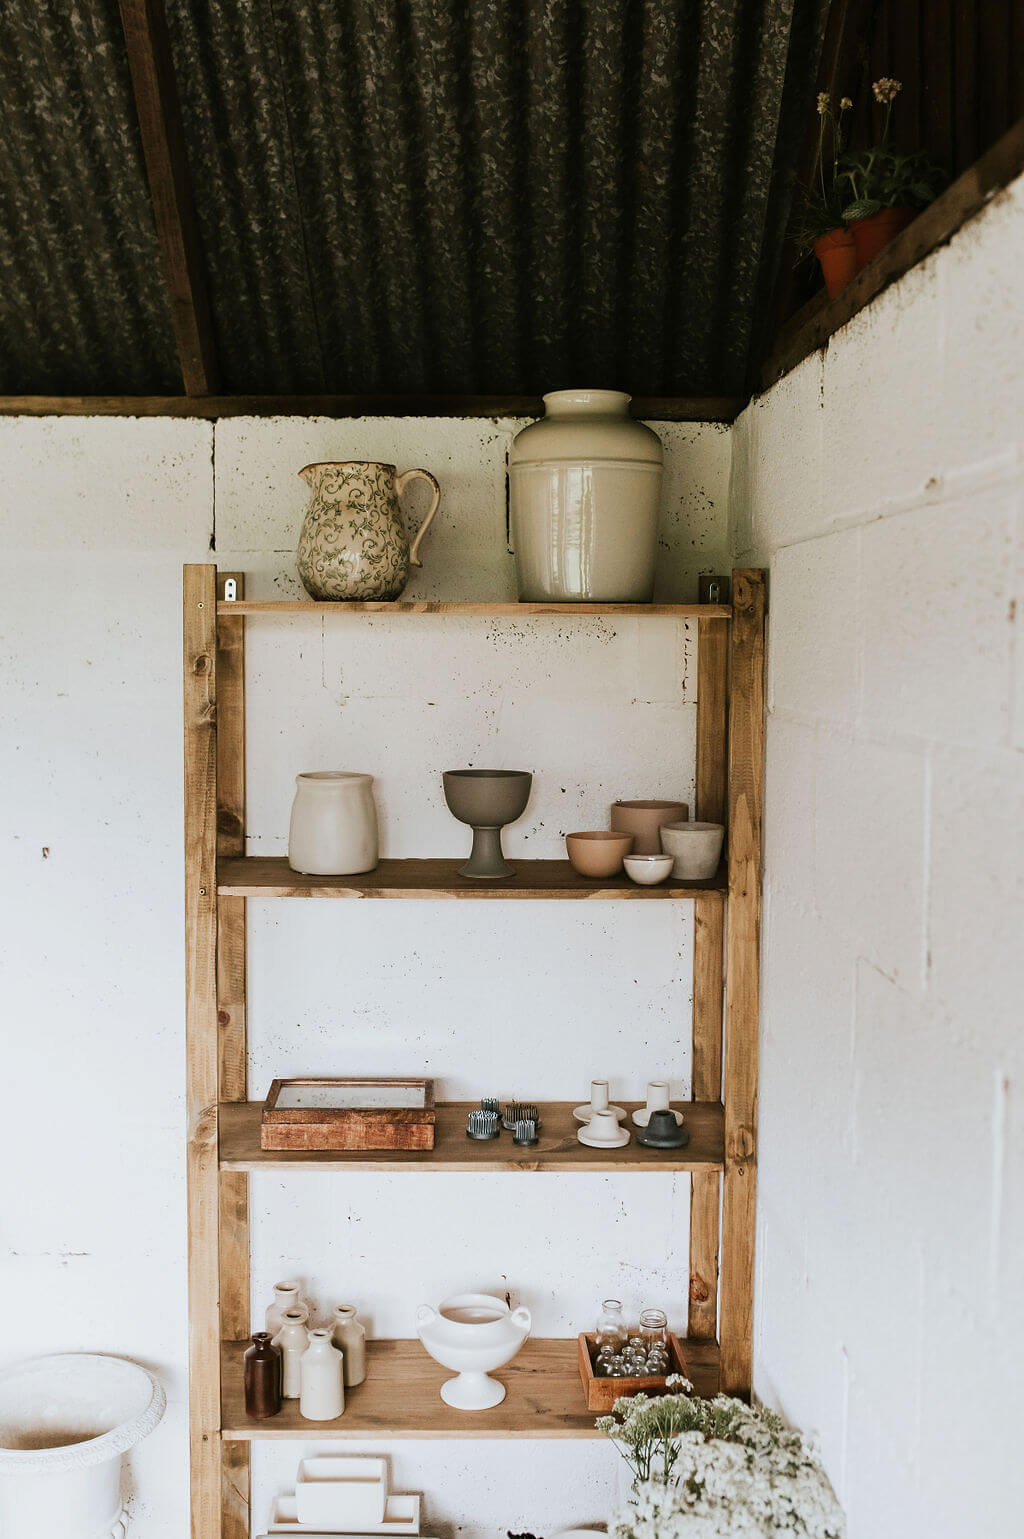 Pots and ceramics inside Tomoka India's midlands flower studio